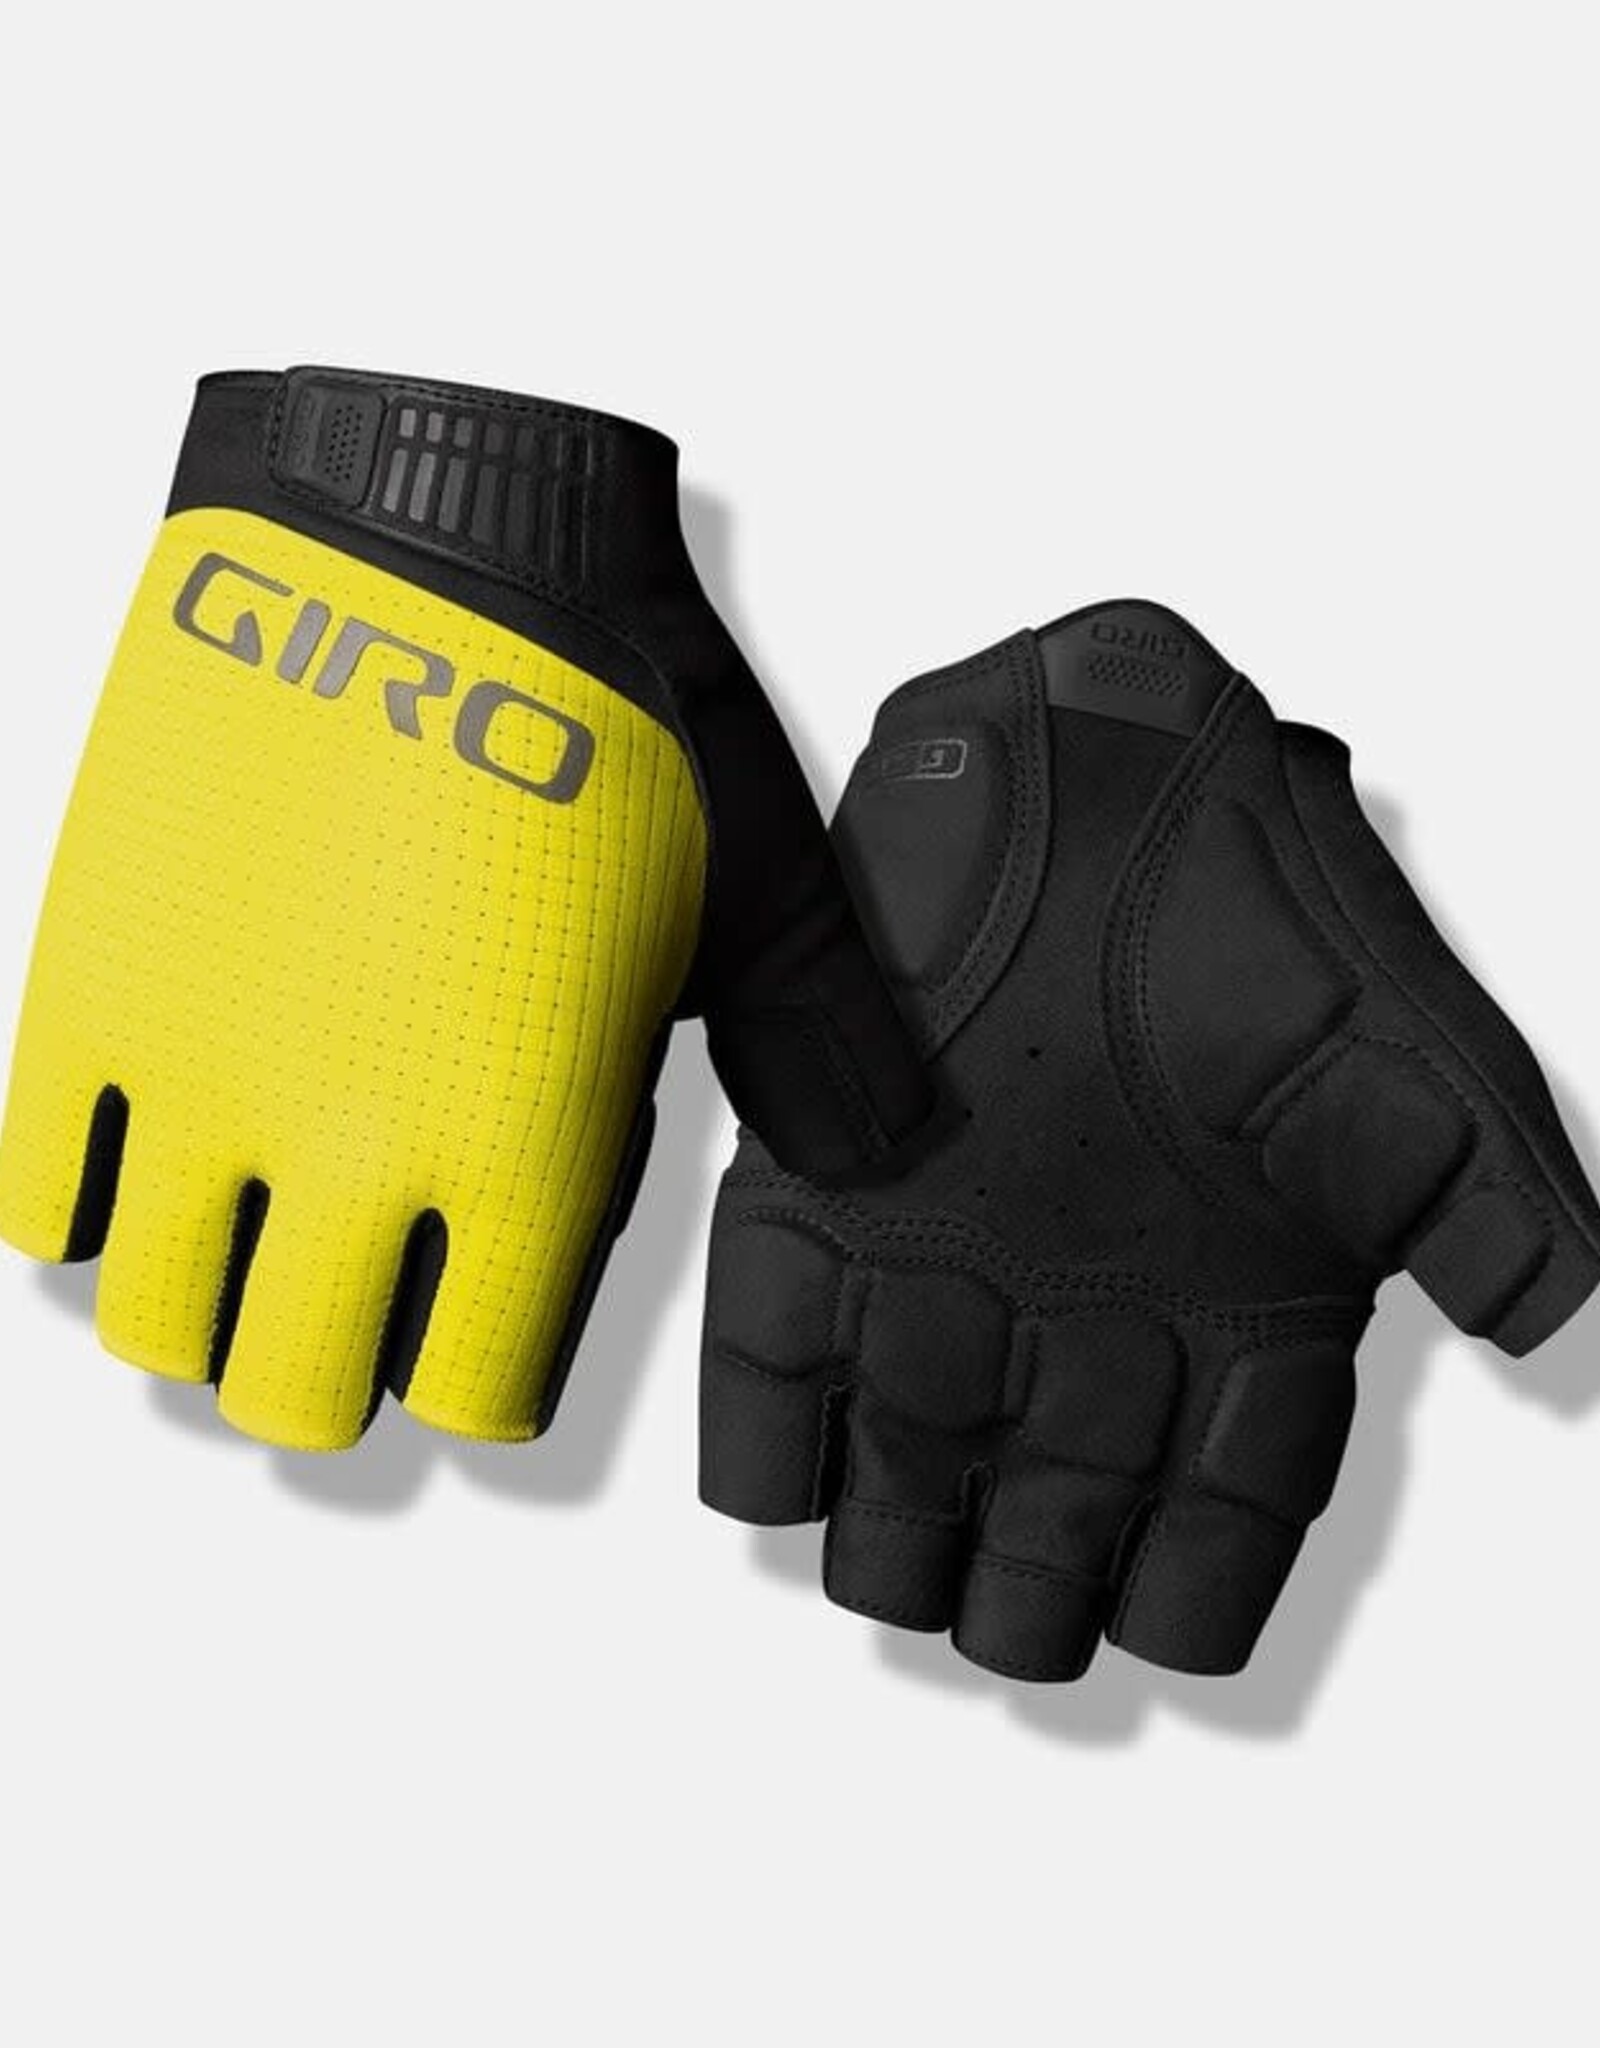 Giro Bravo II Gel Glove Highlight Yellow XL 7160158